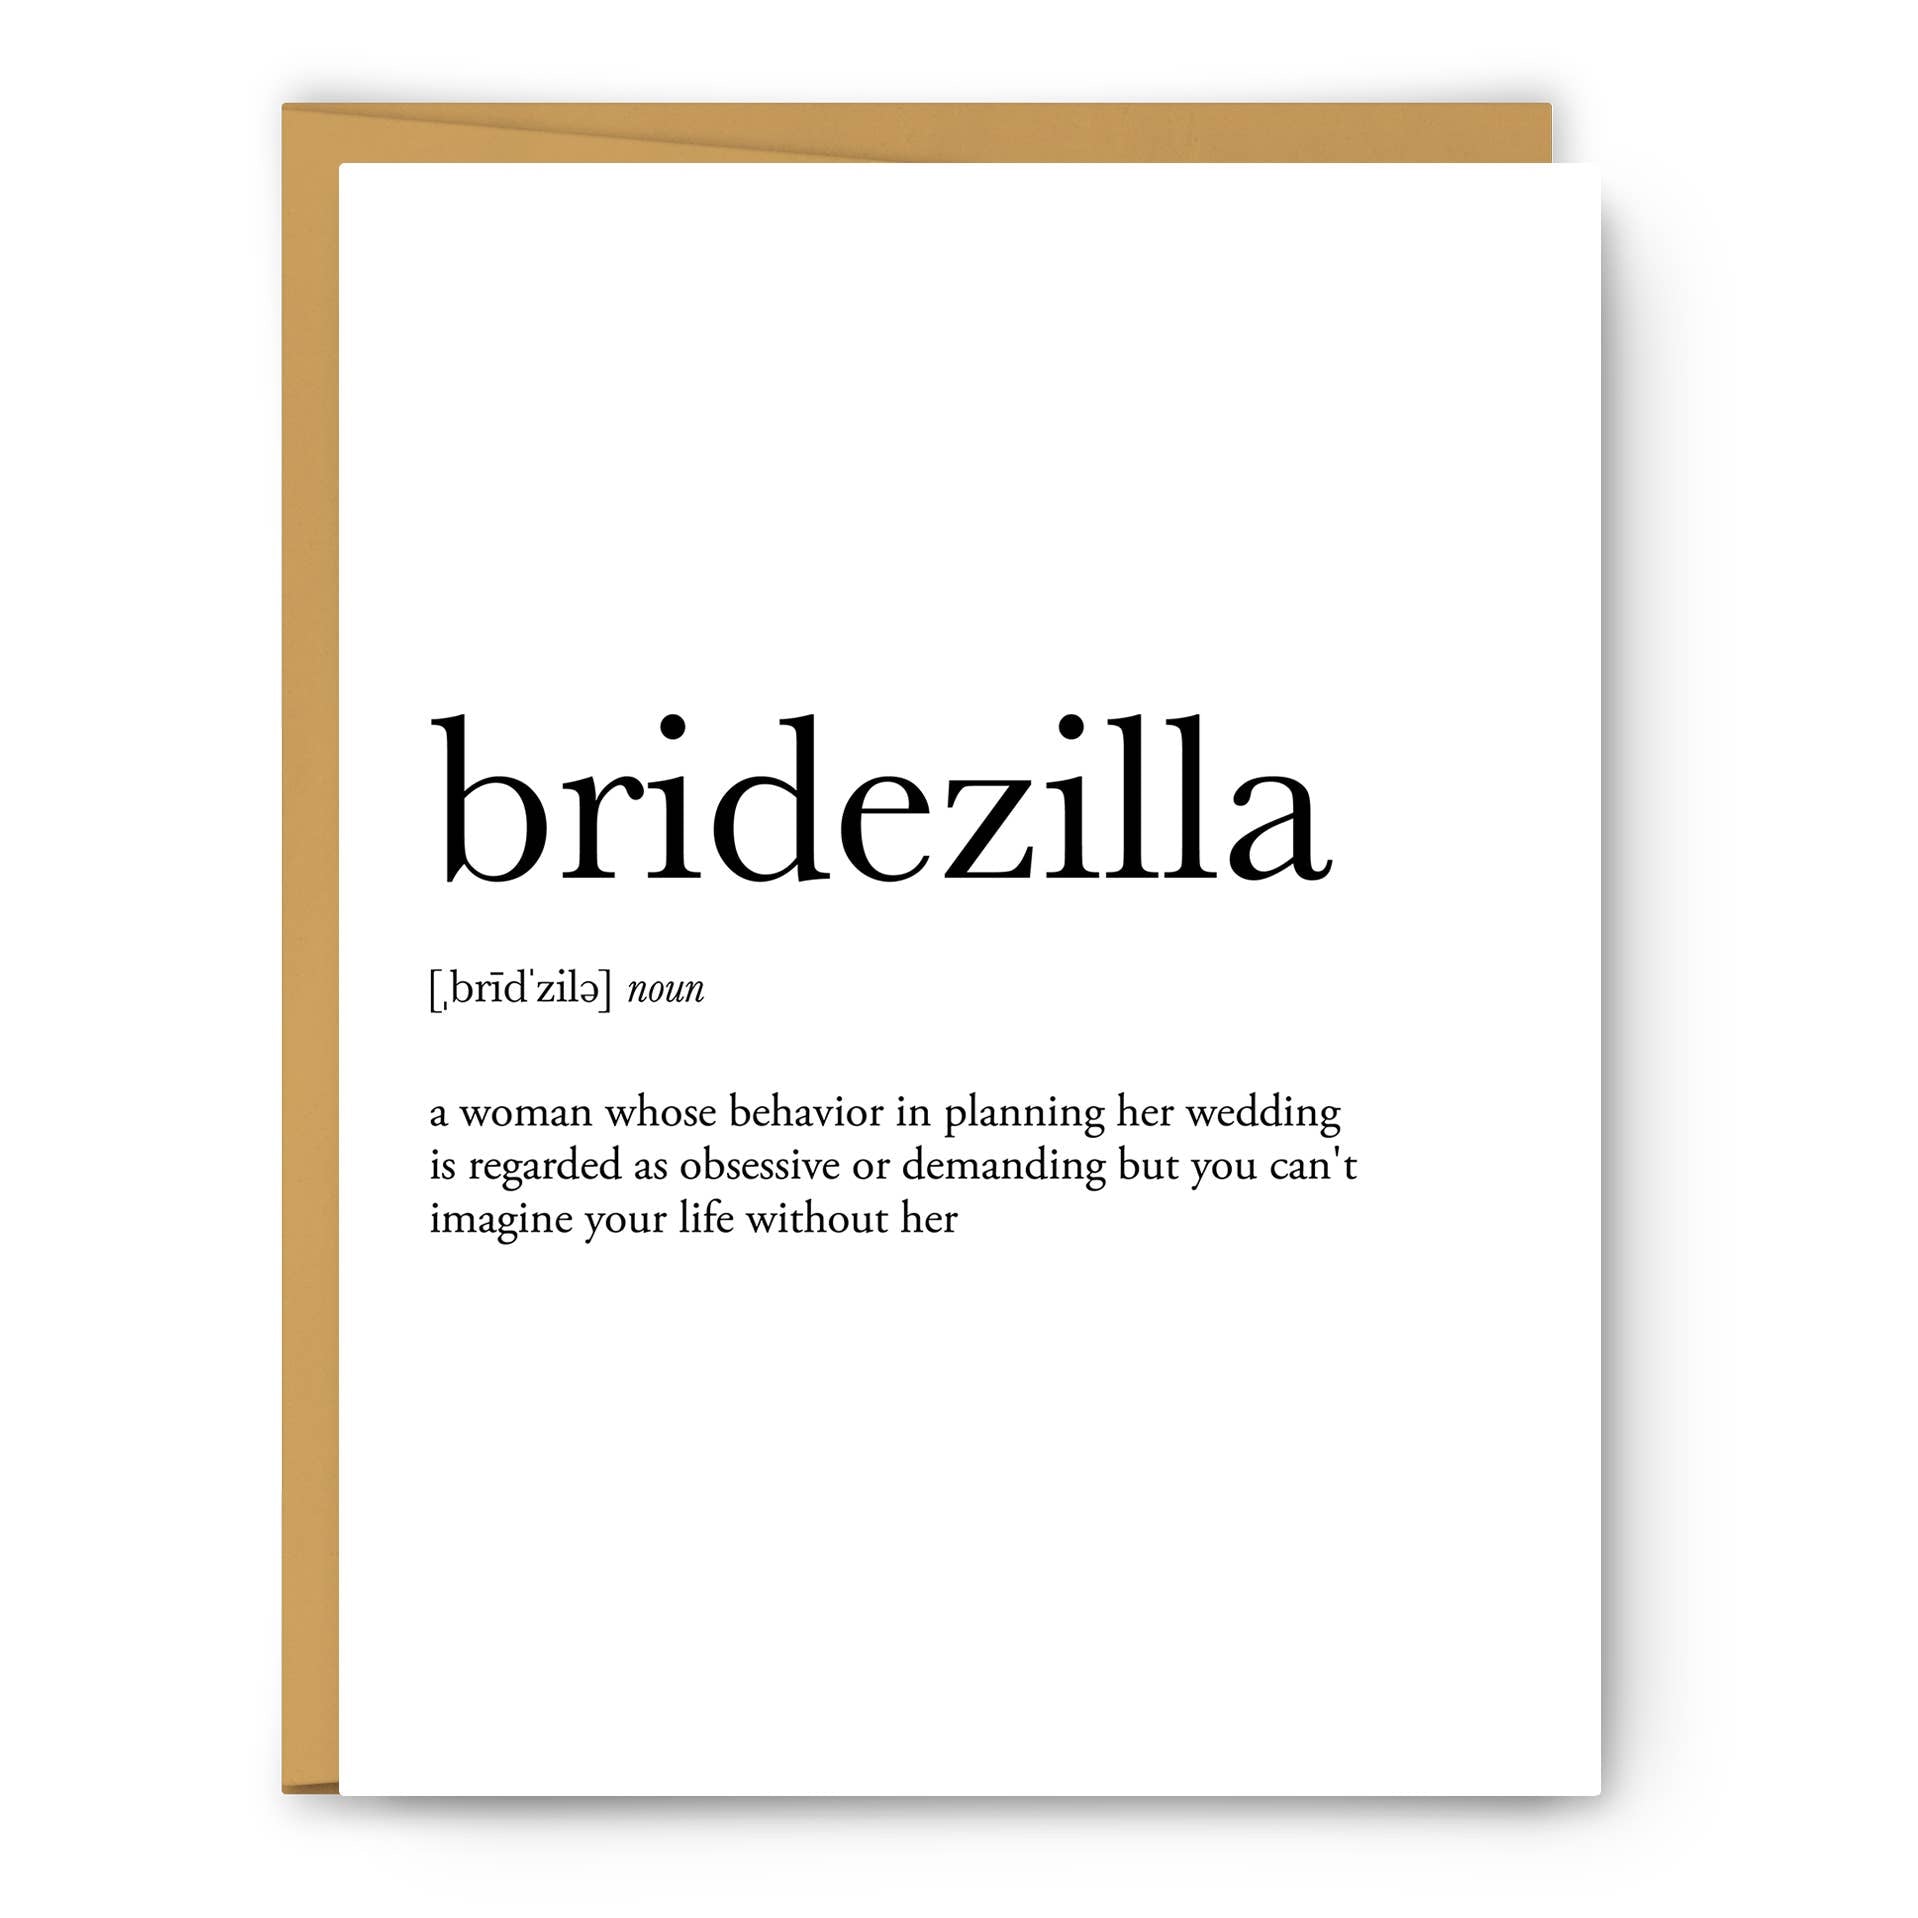 Bridezilla Definition Card